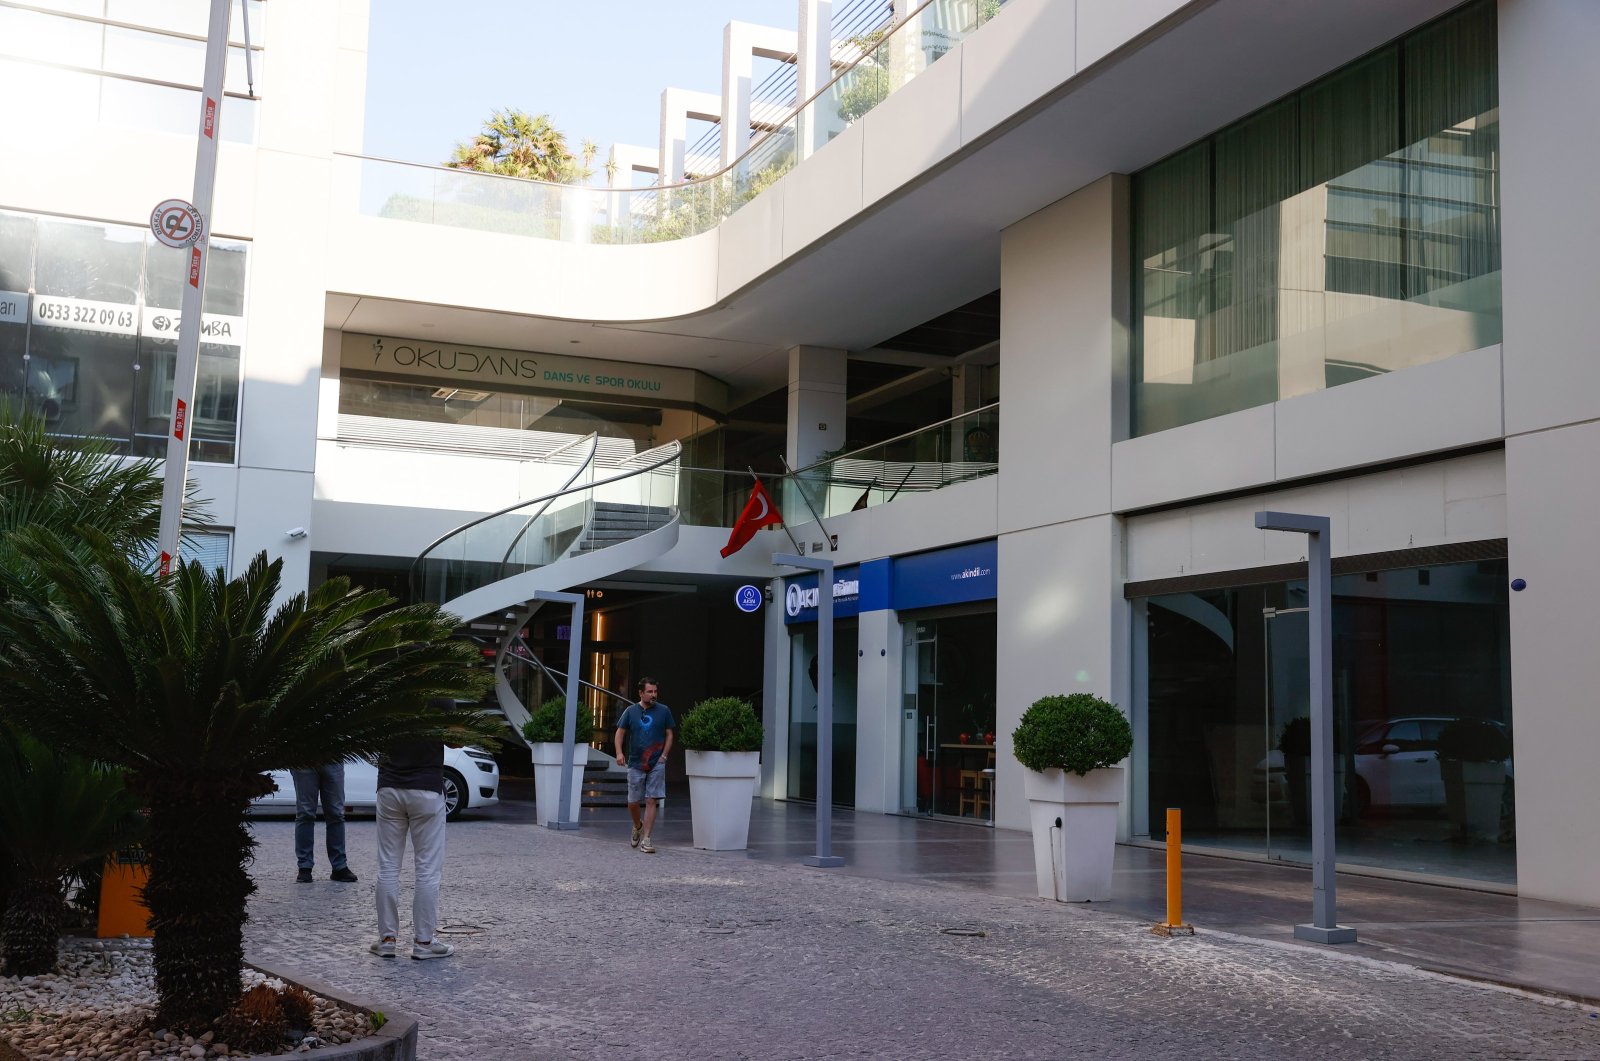 Staff critically injured in attack on Swedish Consulate in Türkiye